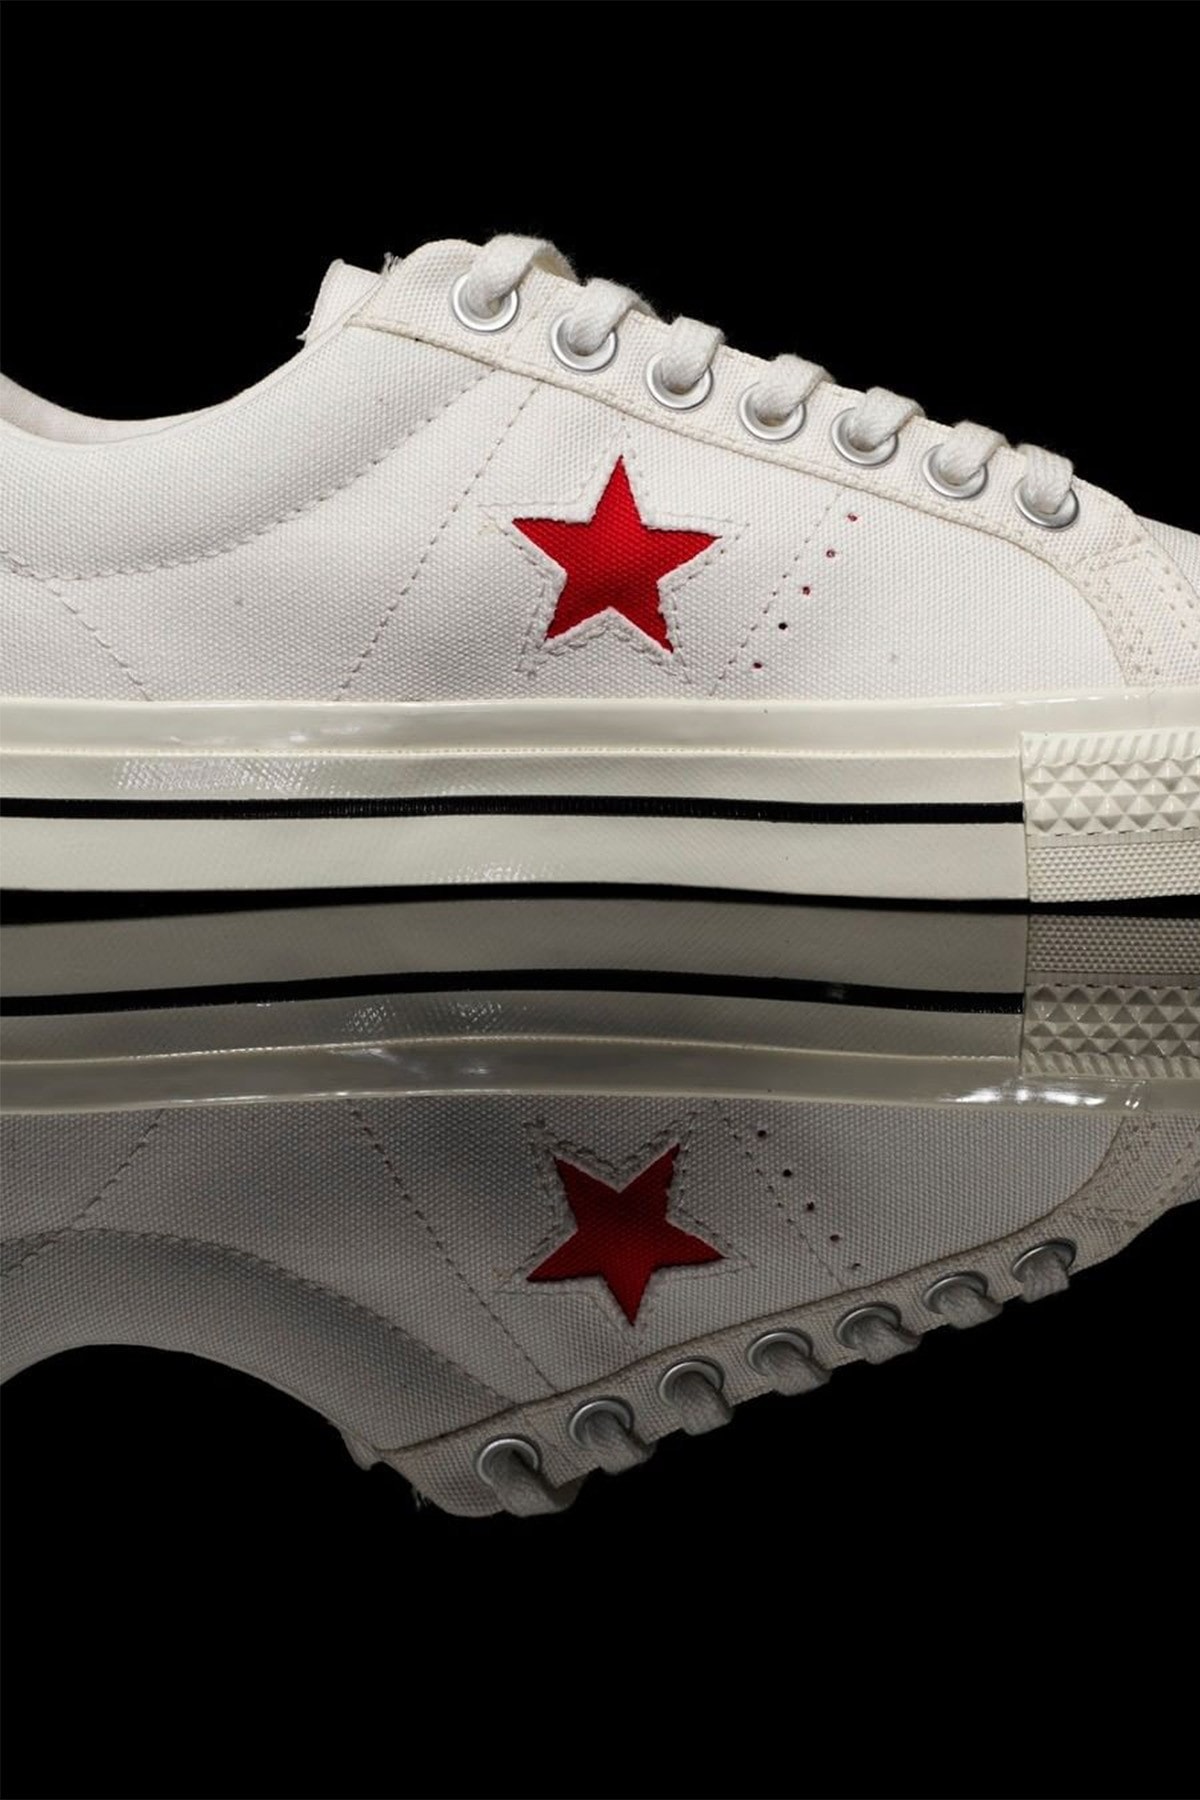 CdG PLAY x Converse One Star 聯名系列鞋款發佈